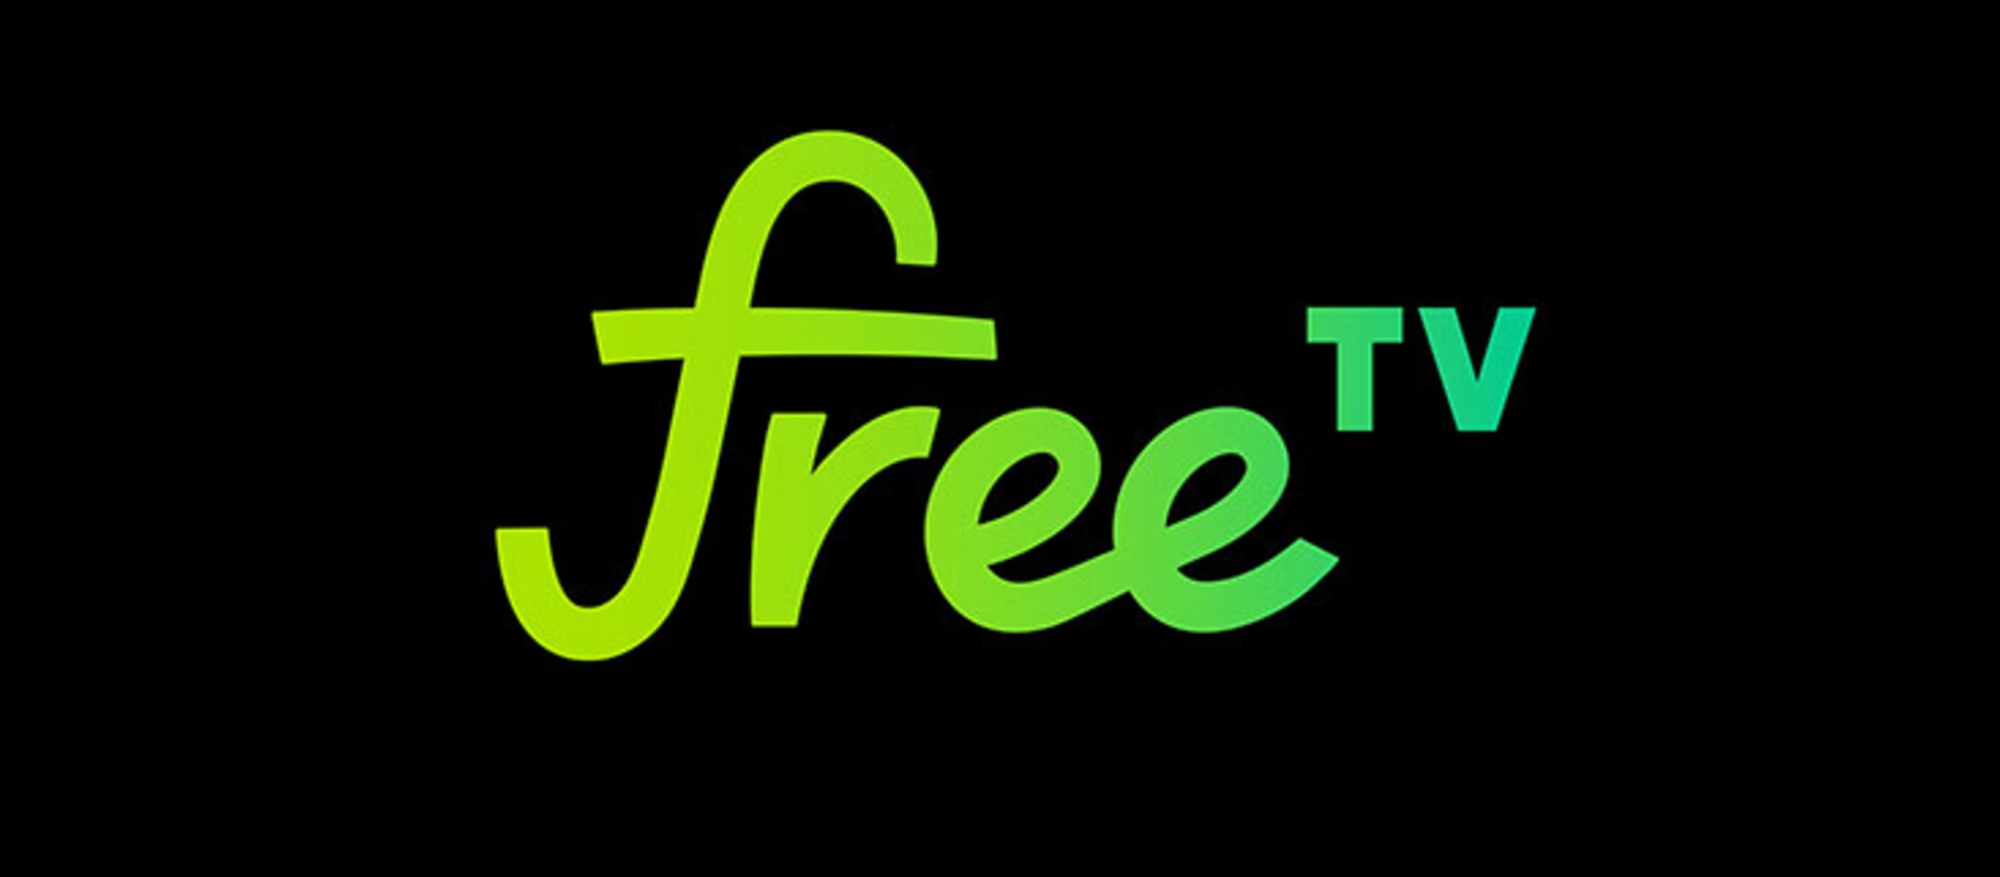 Free TV